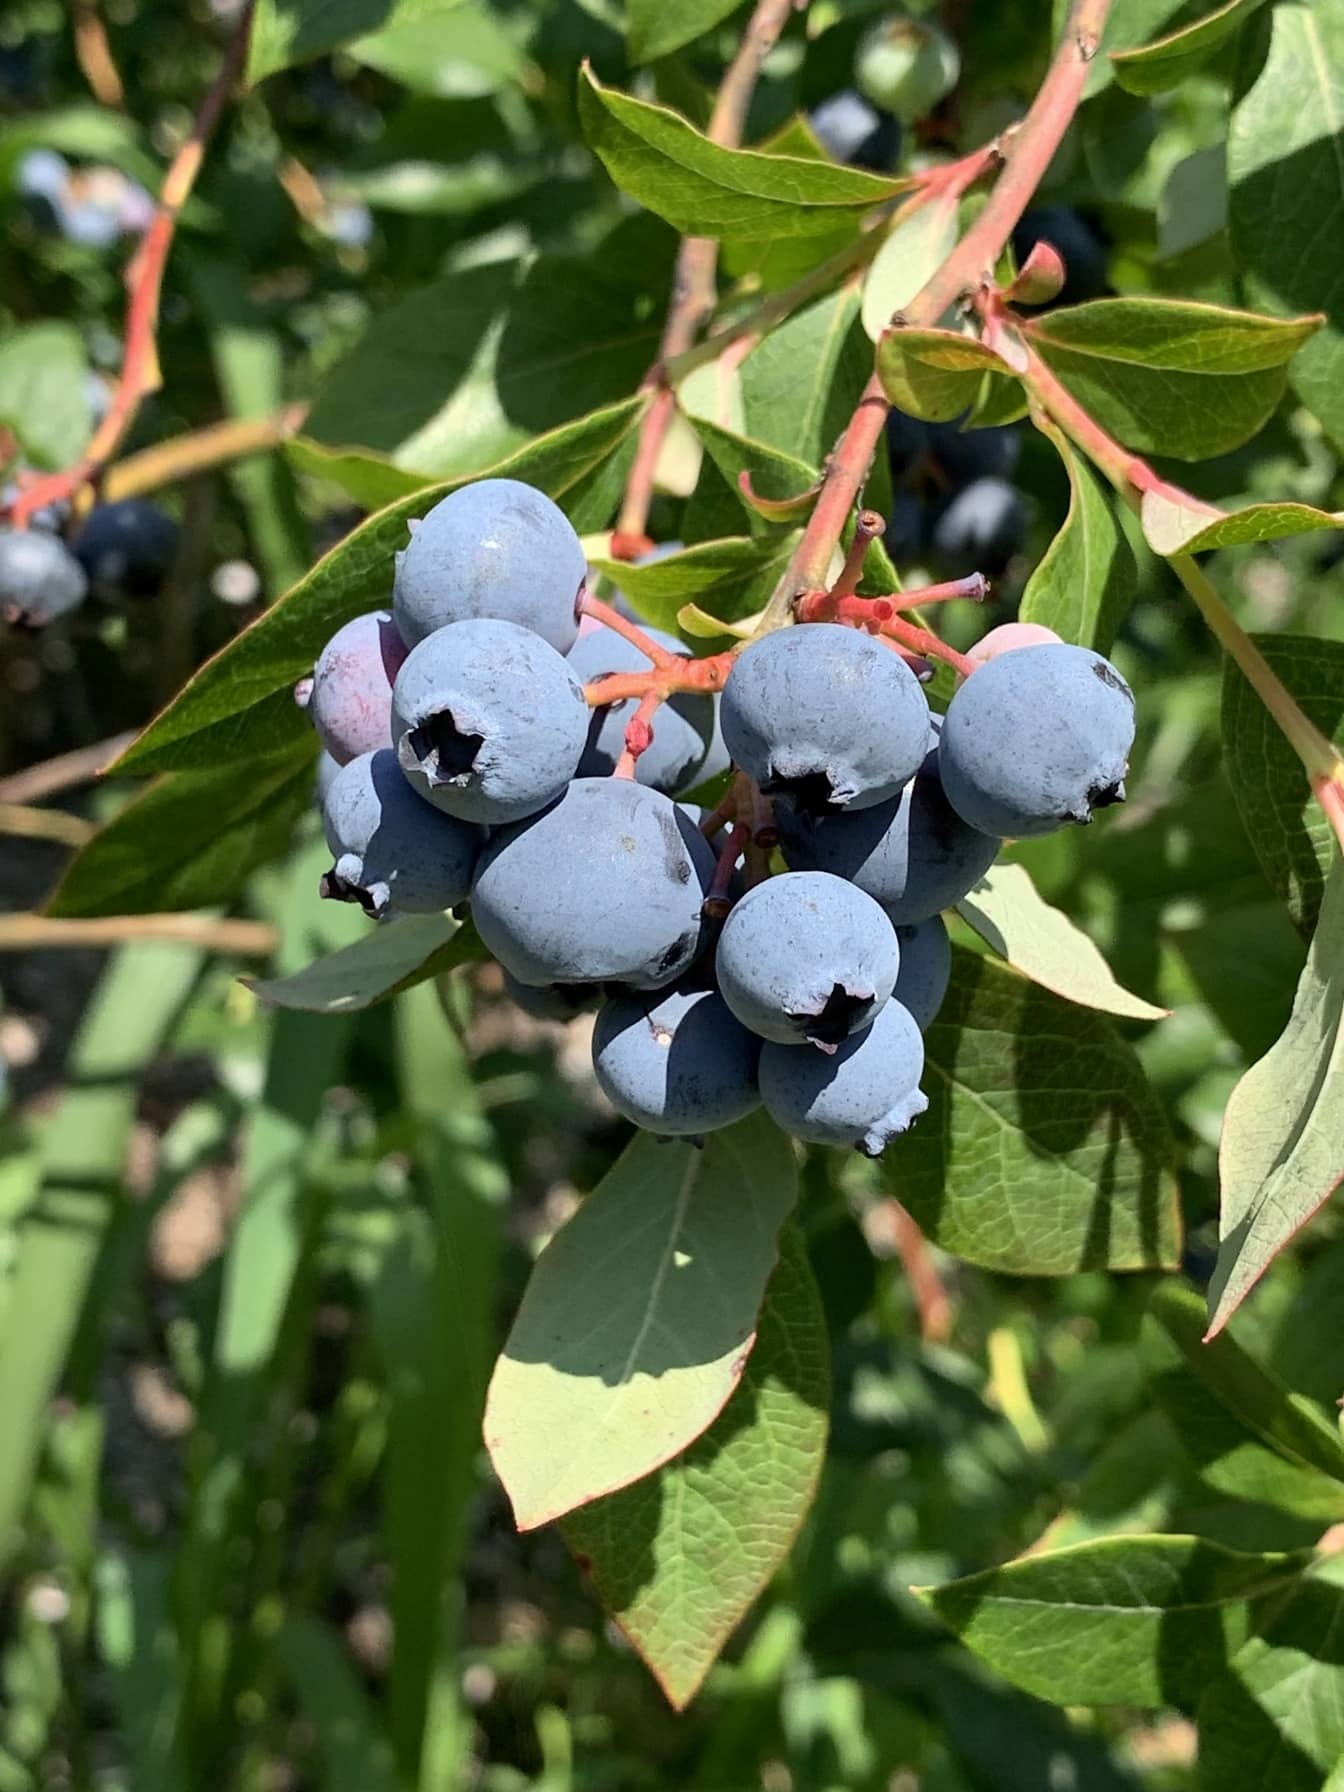 Close-up of ripe fruit organic blueberries (Vaccinium corymbosum) in cluster